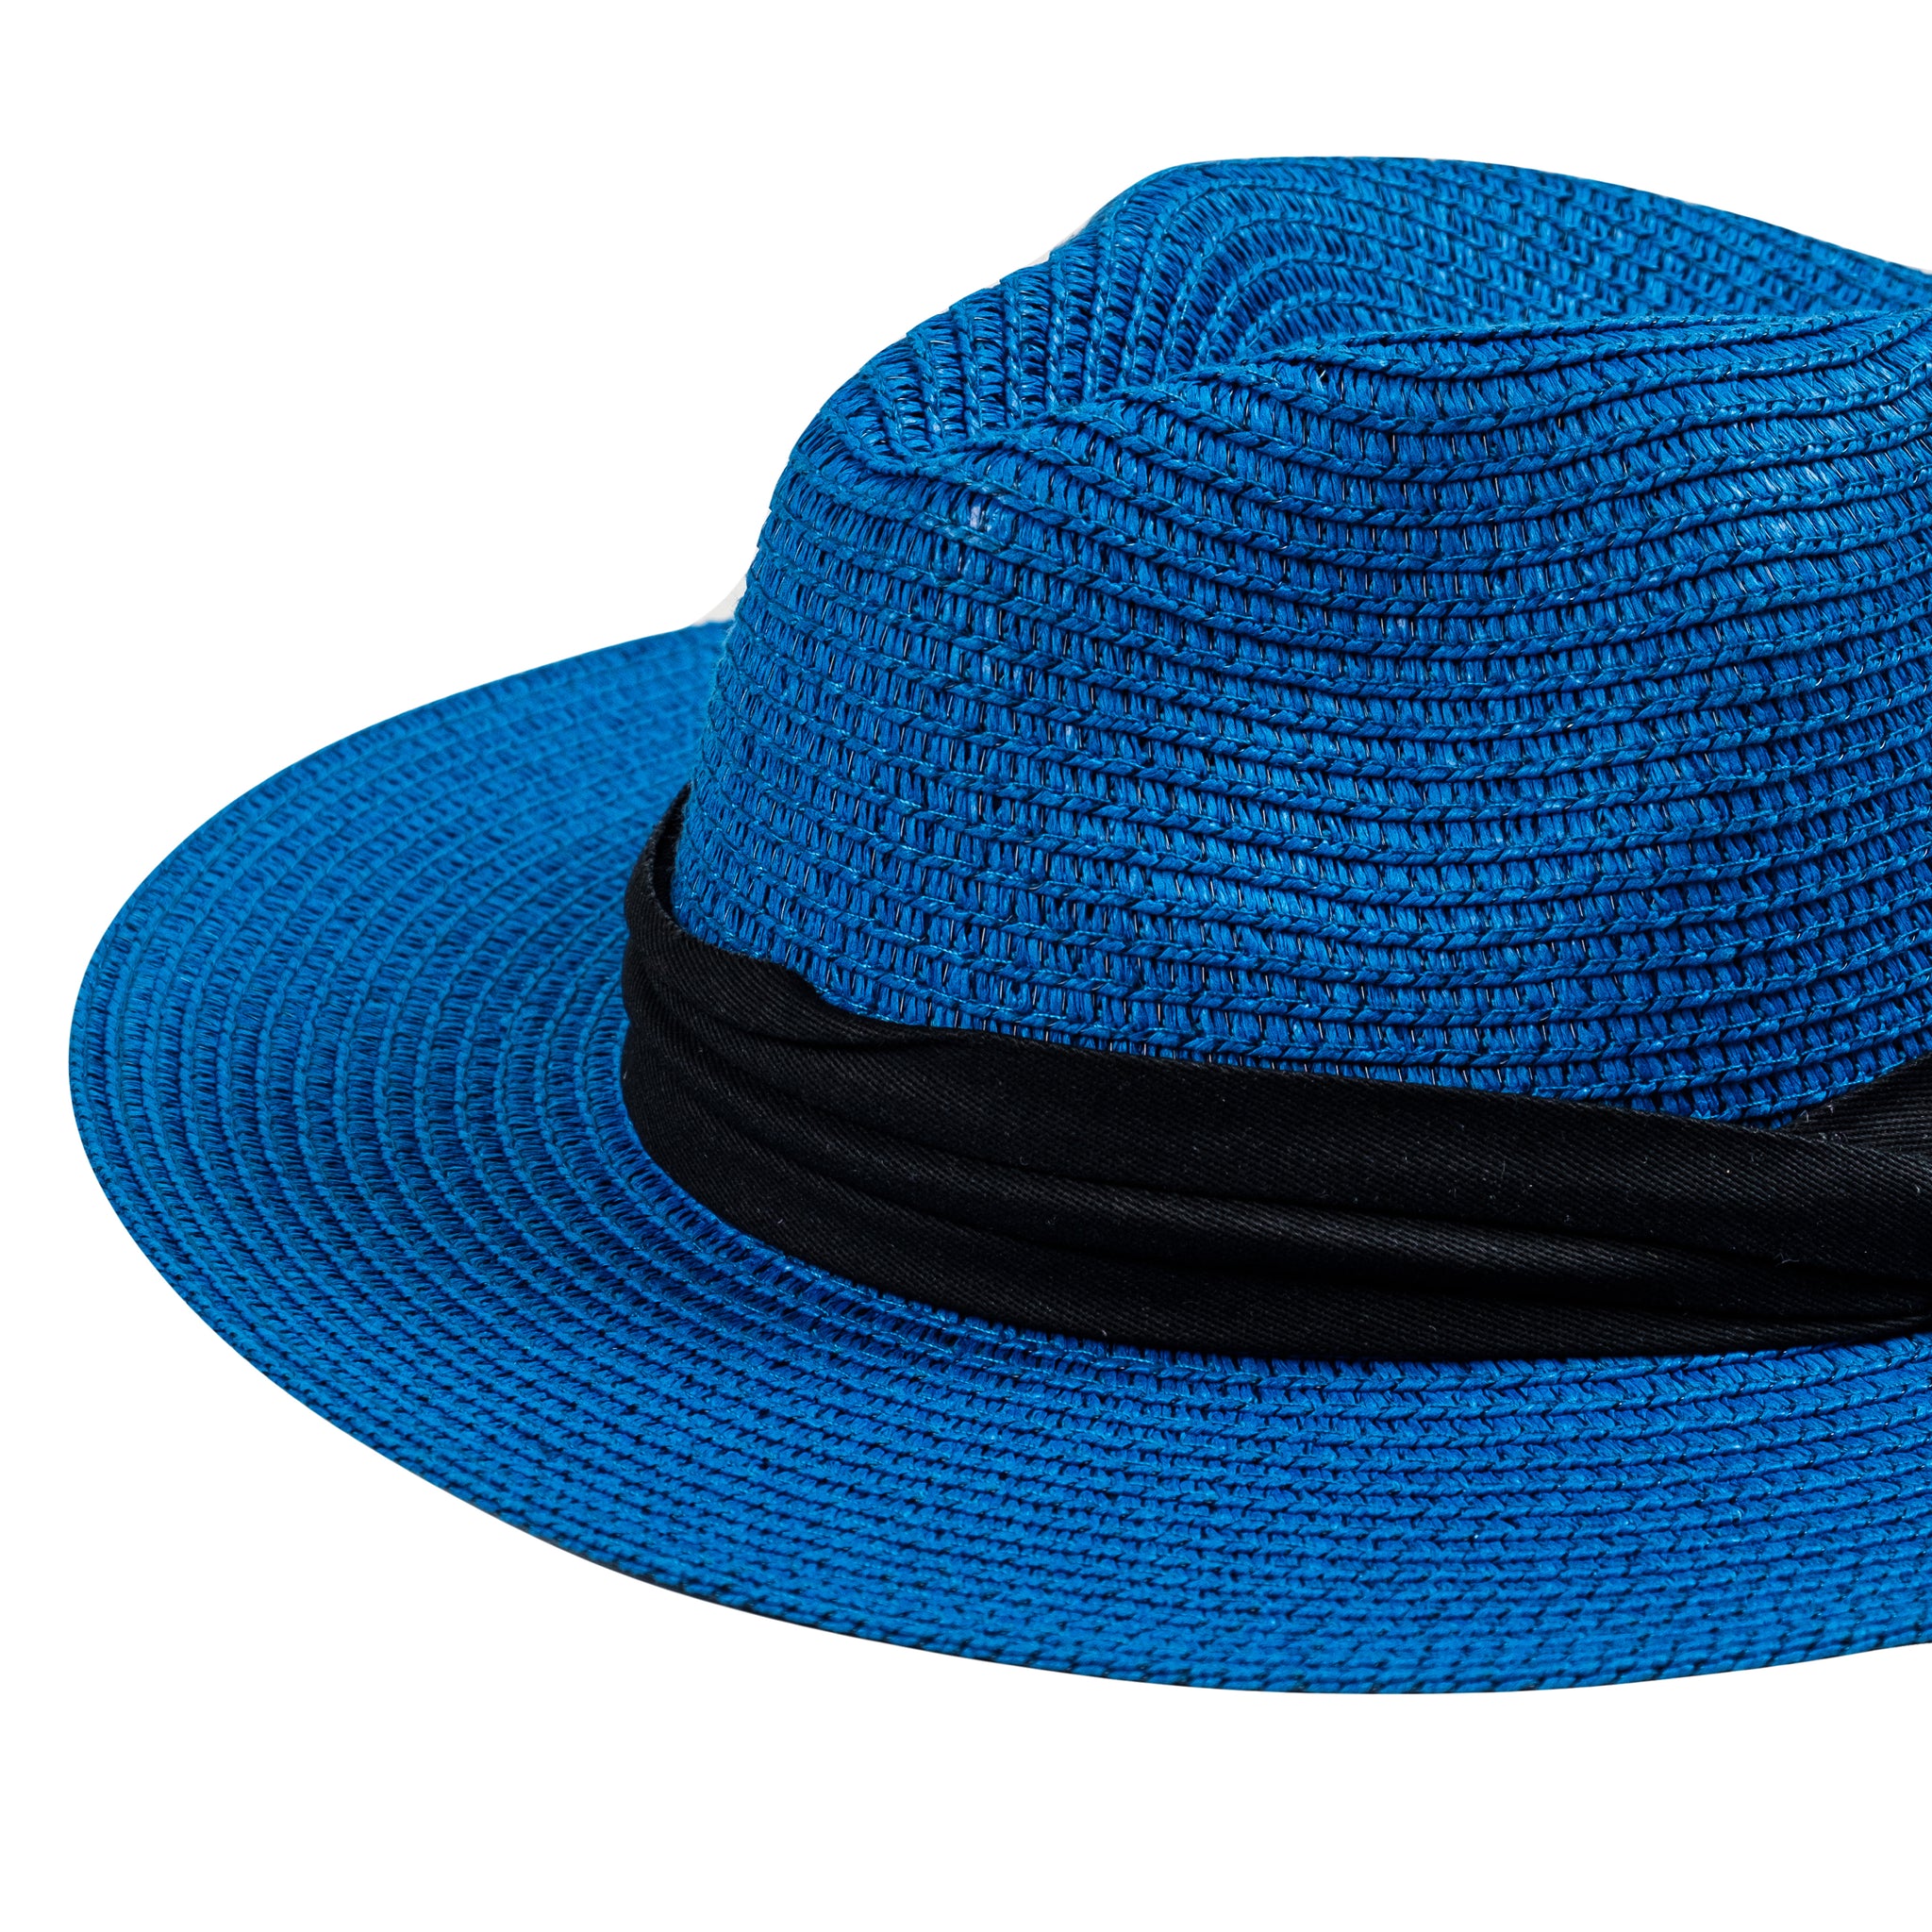 Chokore Straw Fedora Hat with Wide Brim (Blue)